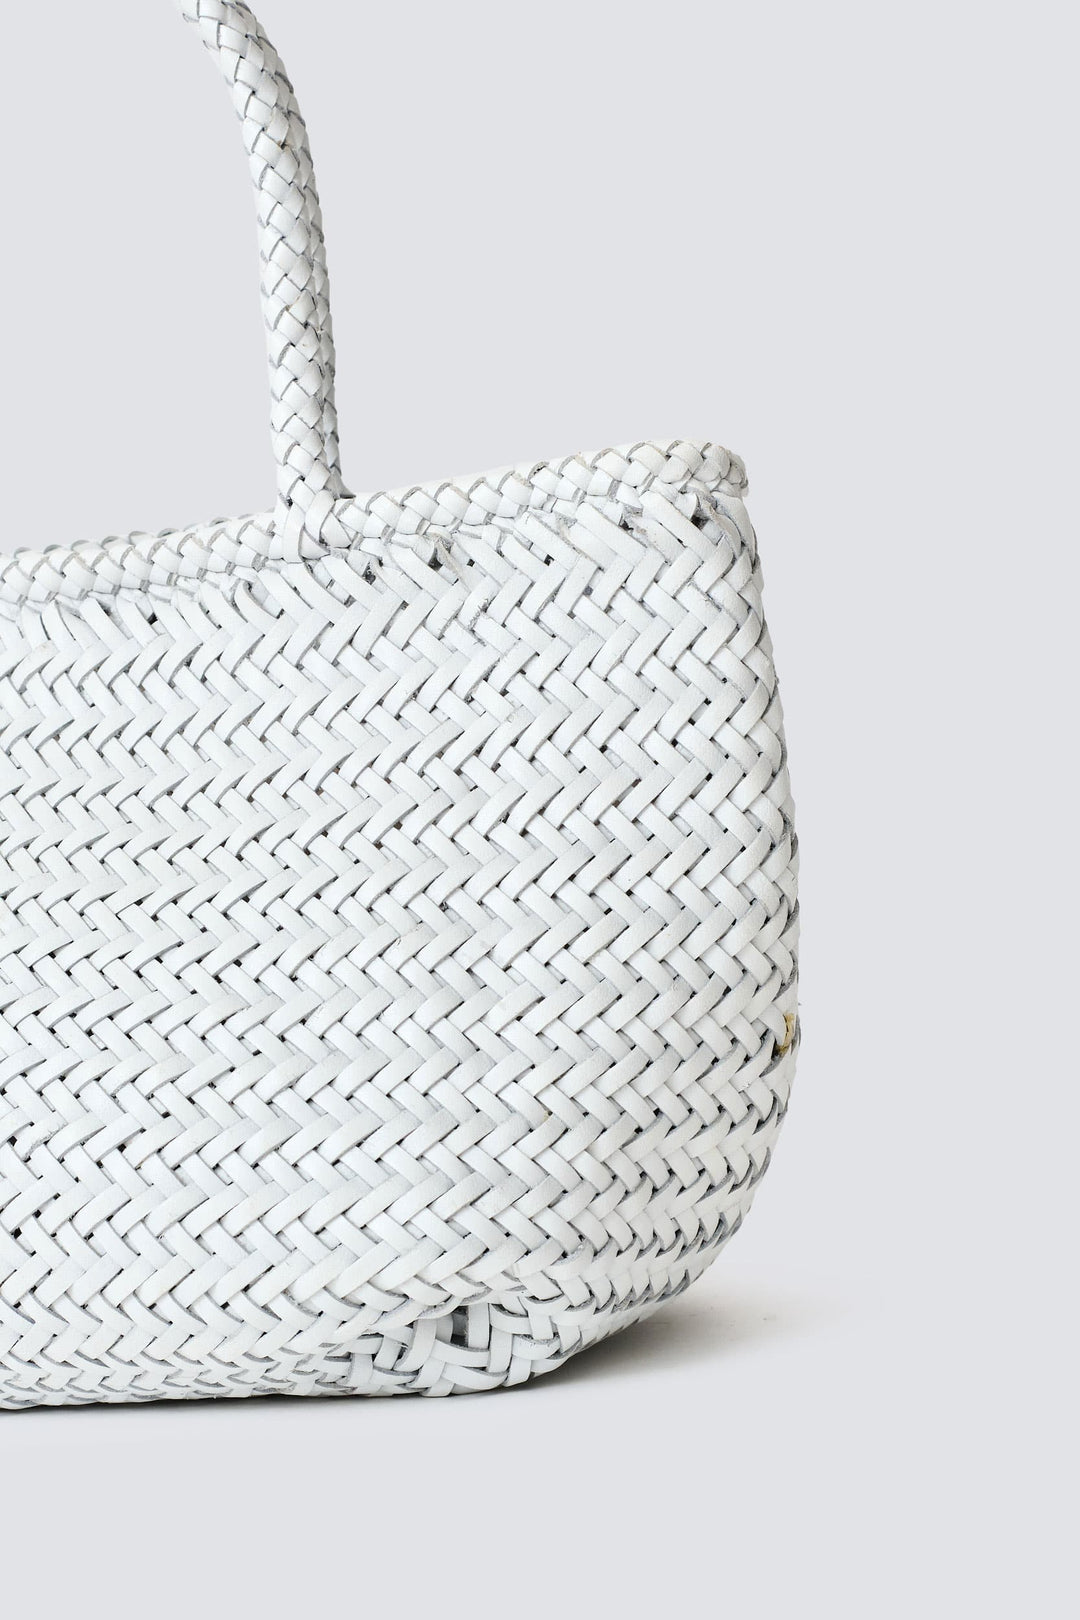 Dragon Diffusion woven leather bag handmade - Grace Basket Small White